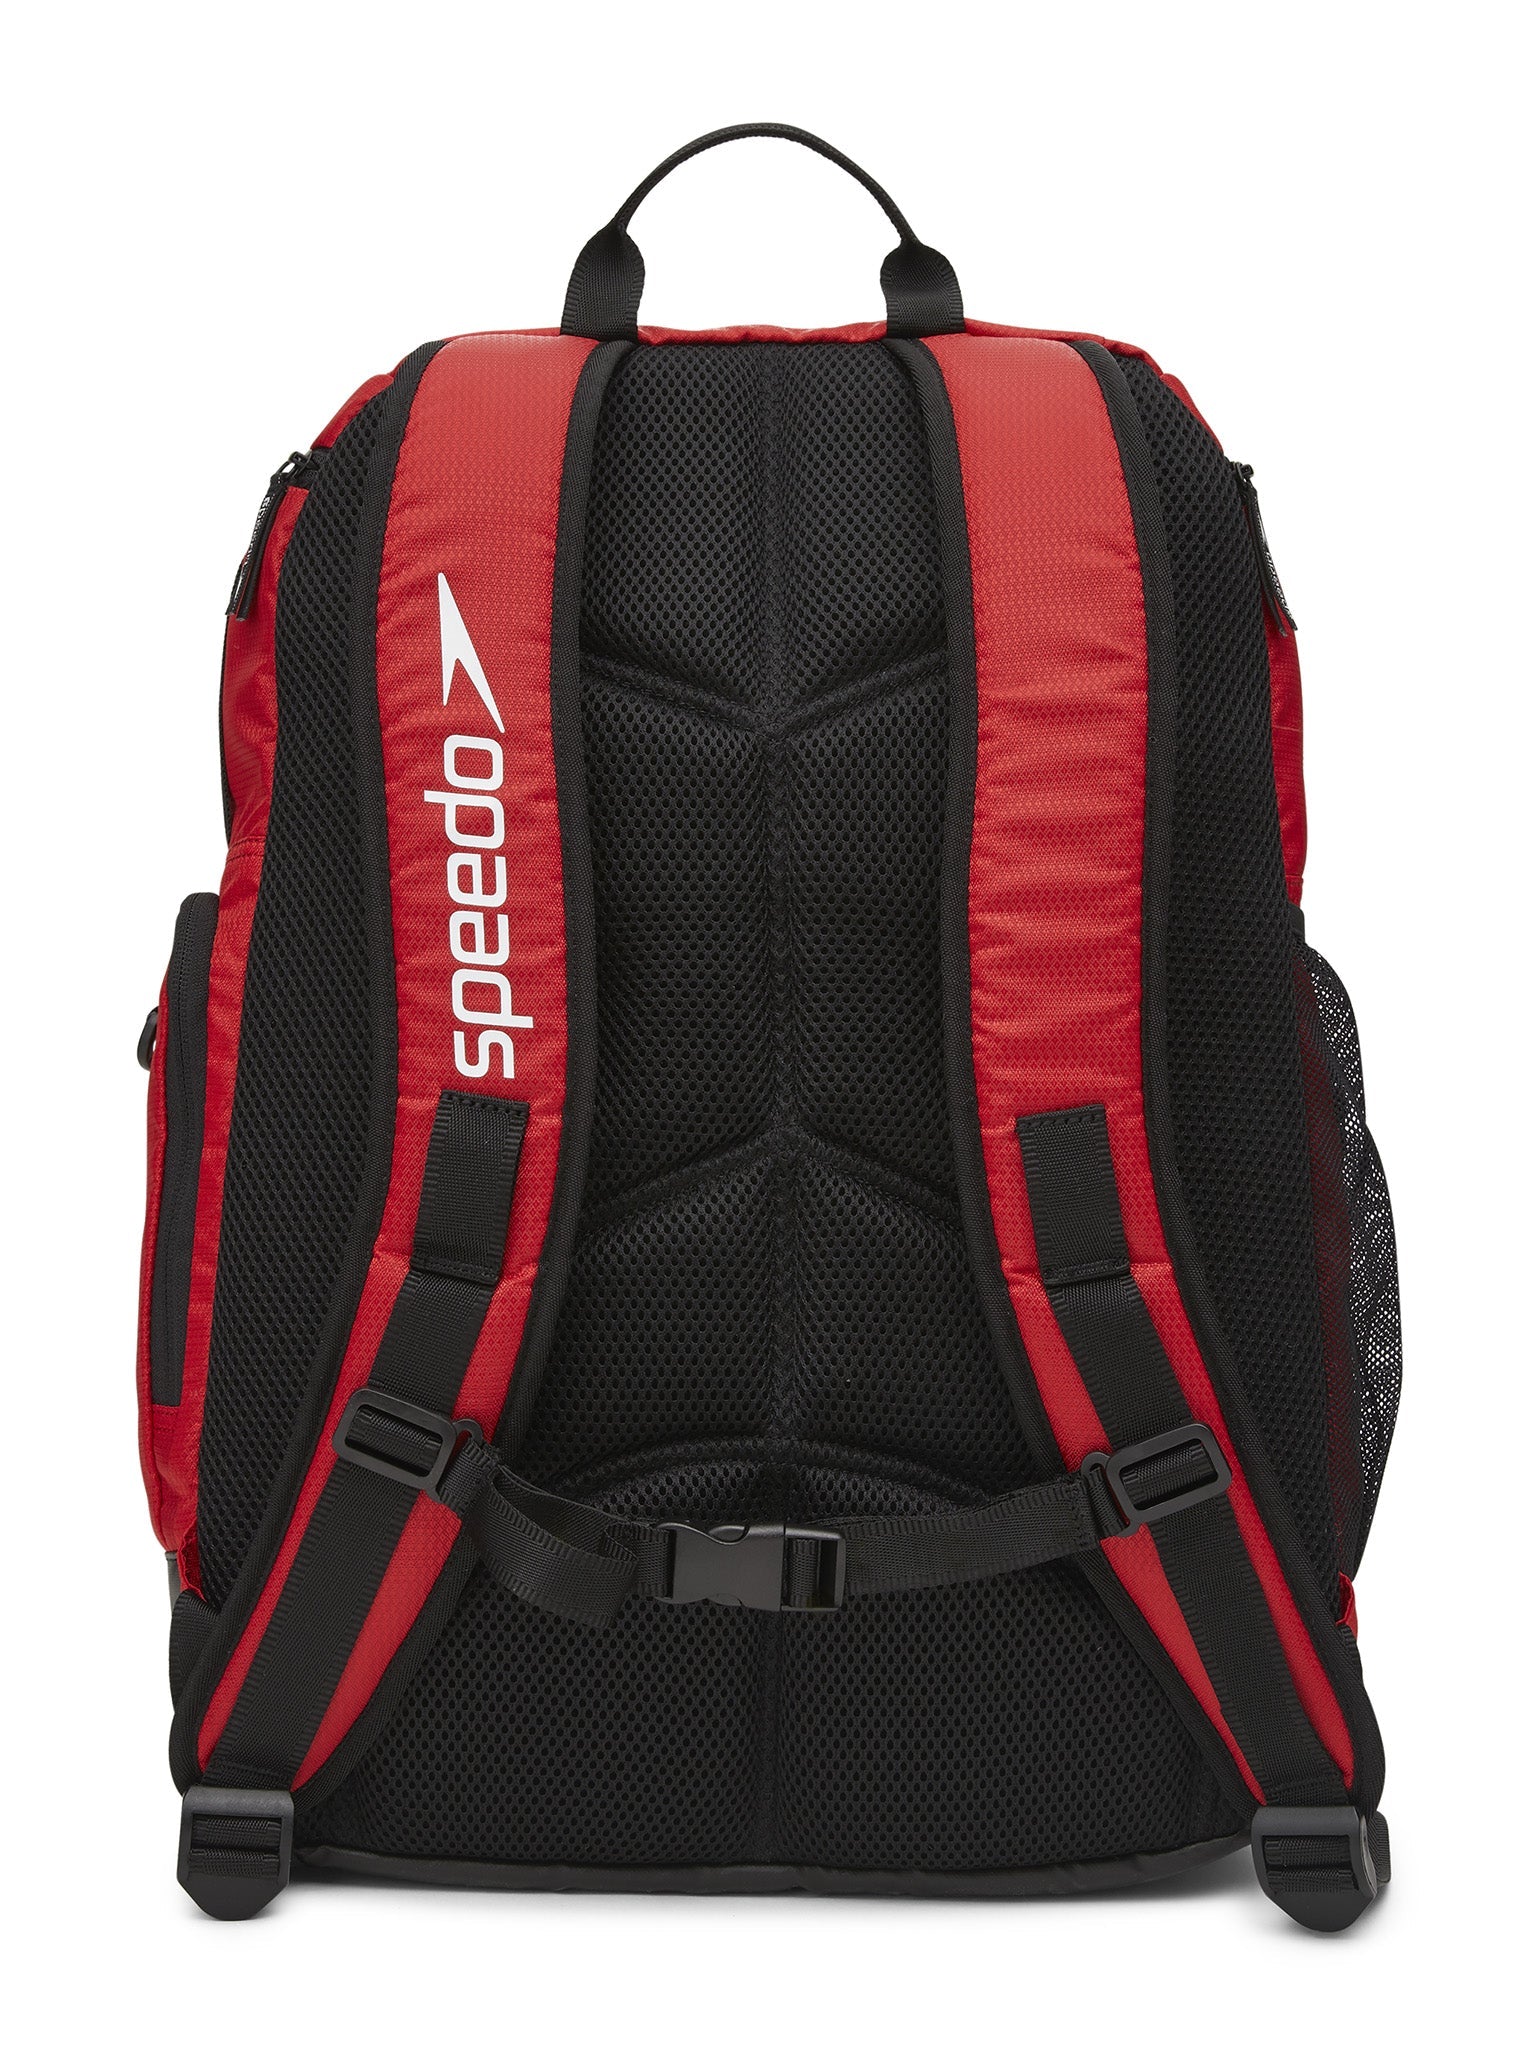 Teamster 2.0 Backpack - Red